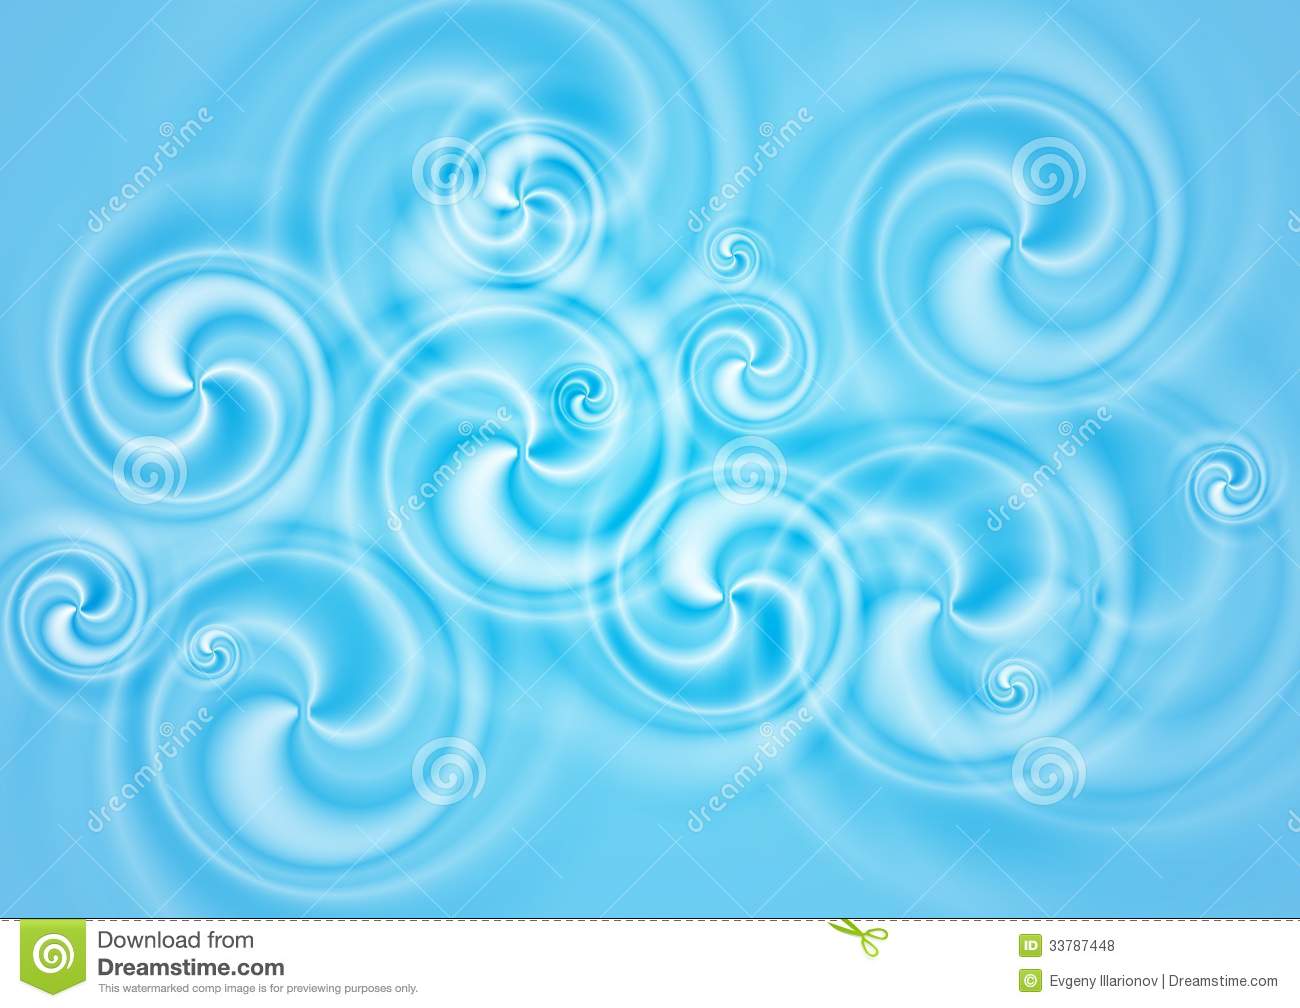 Elegant Swirl Designs Vector